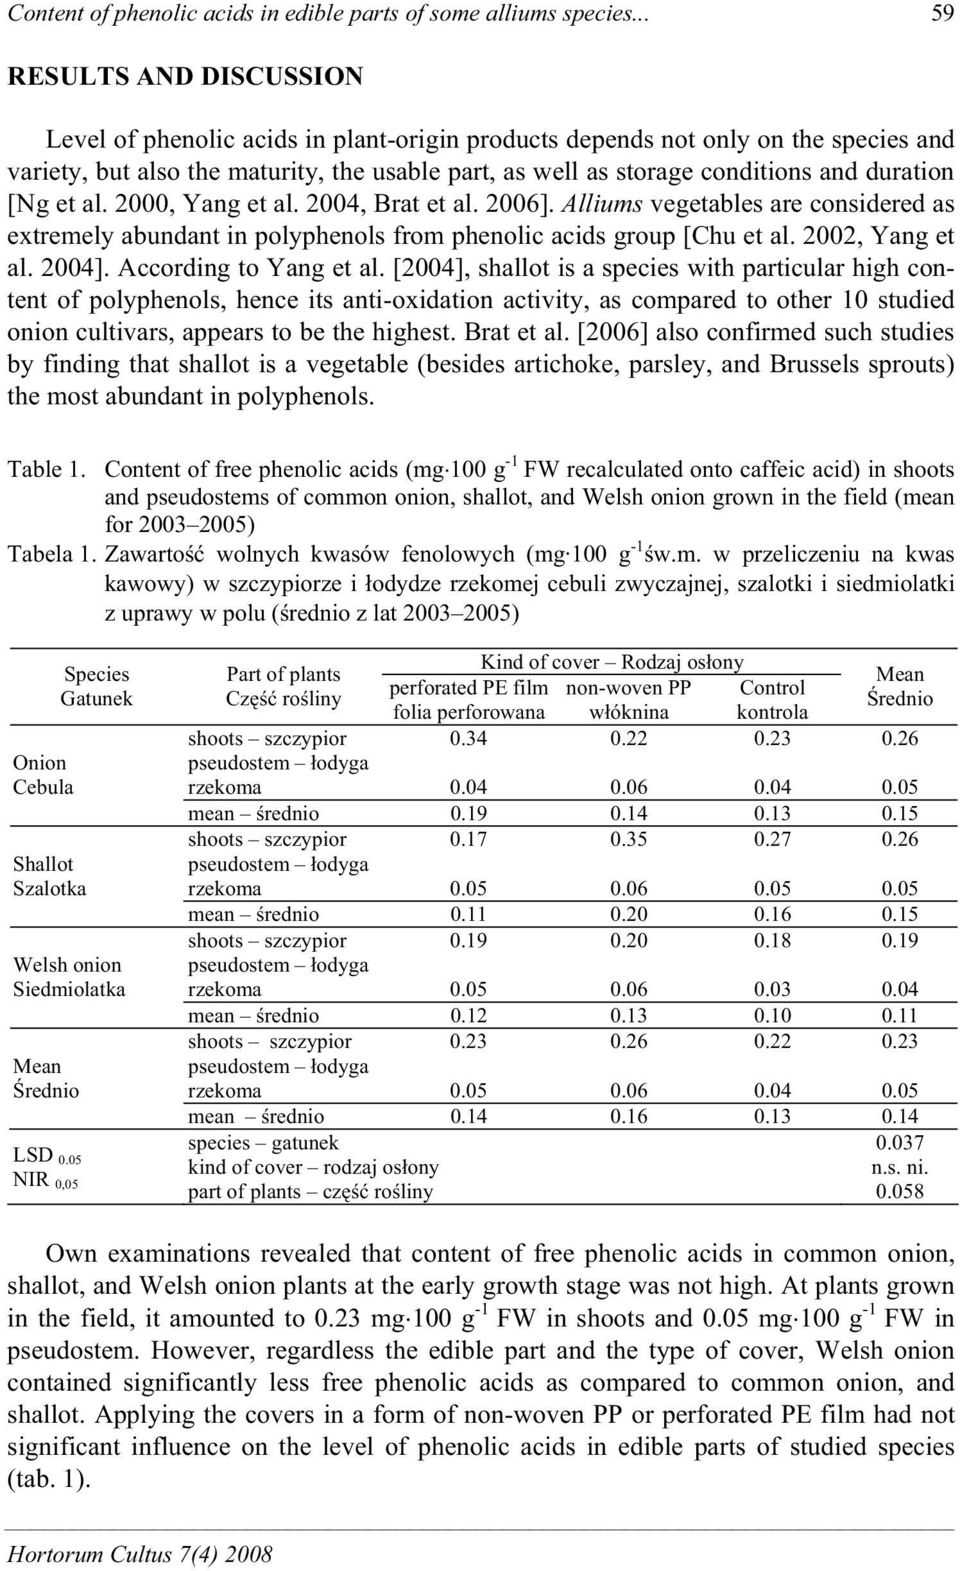 duration [Ng et al. 2000, Yang et al. 2004, Brat et al. 2006]. Alliums vegetables are considered as extremely abundant in polyphenols from phenolic acids group [Chu et al. 2002, Yang et al. 2004].